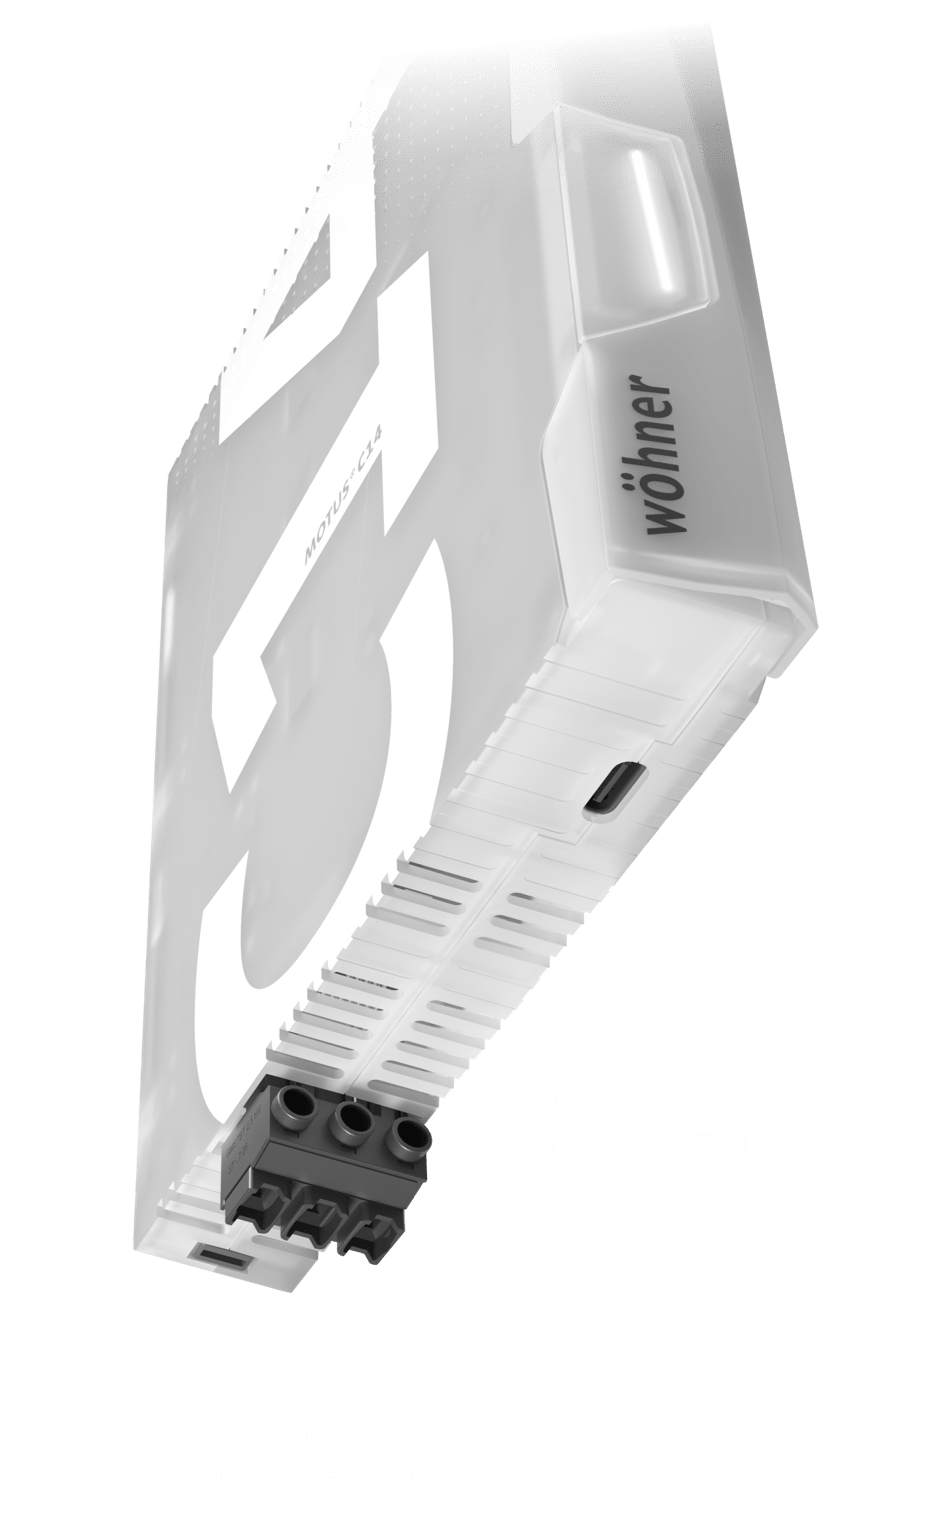 Conect Stecker connect 02 bottom es